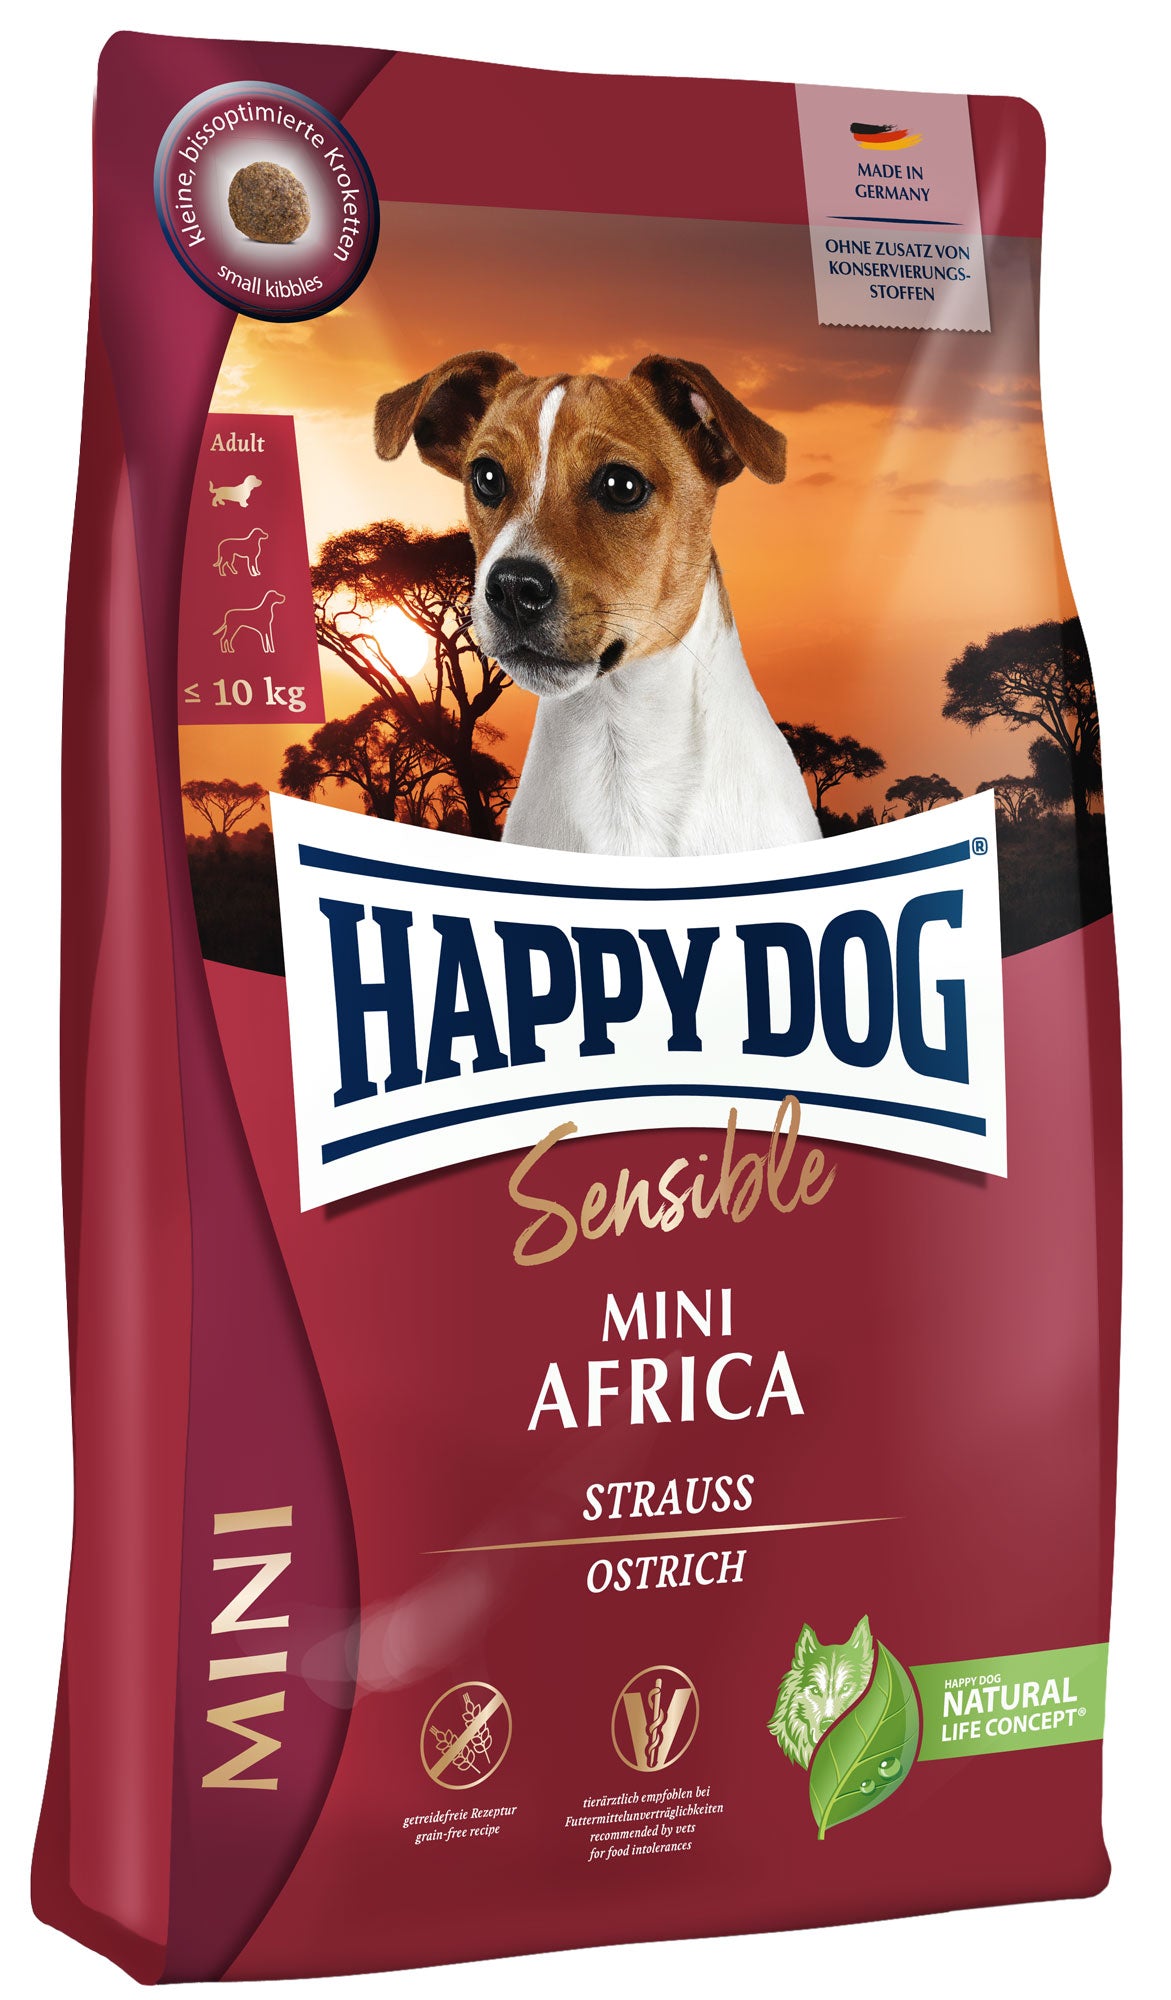 Small Breed Dog Food - Mini Africa